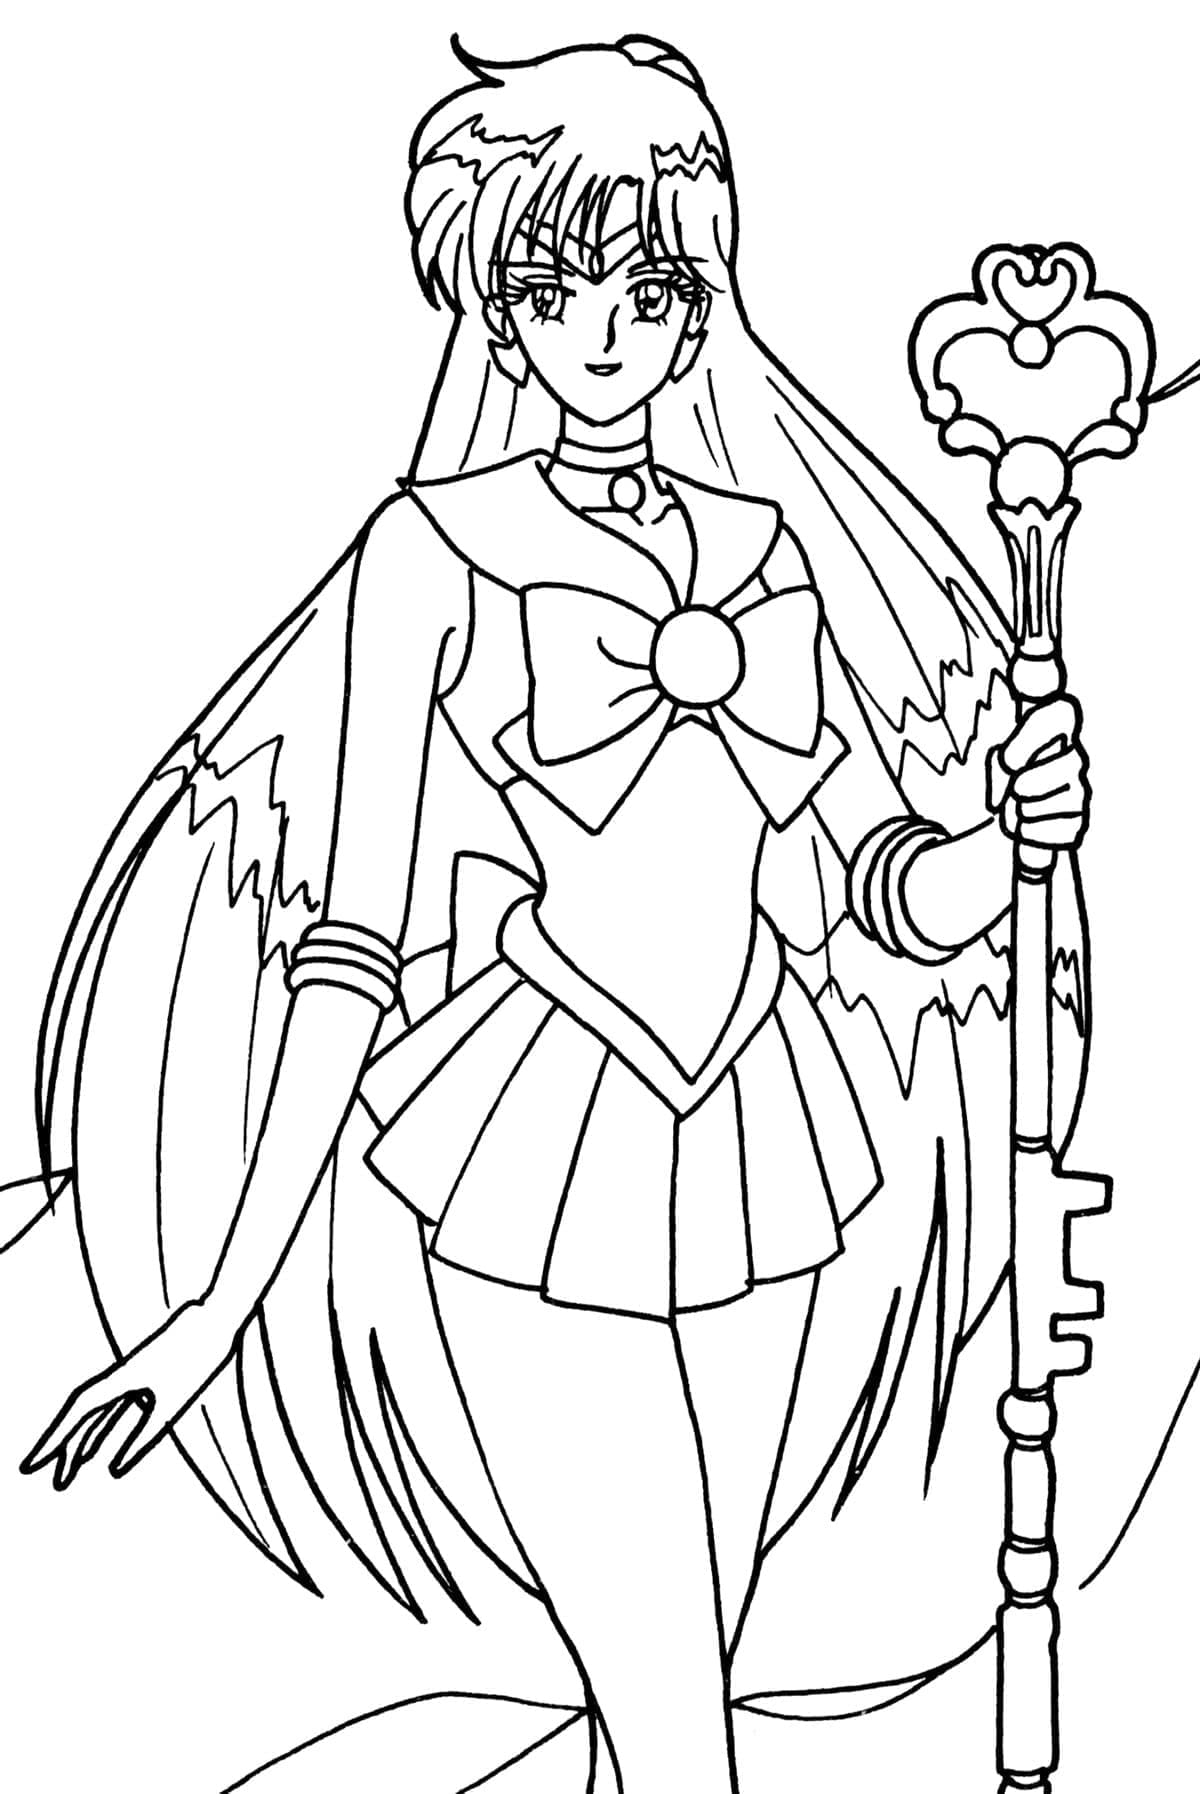 Sailor moon de colorat p42